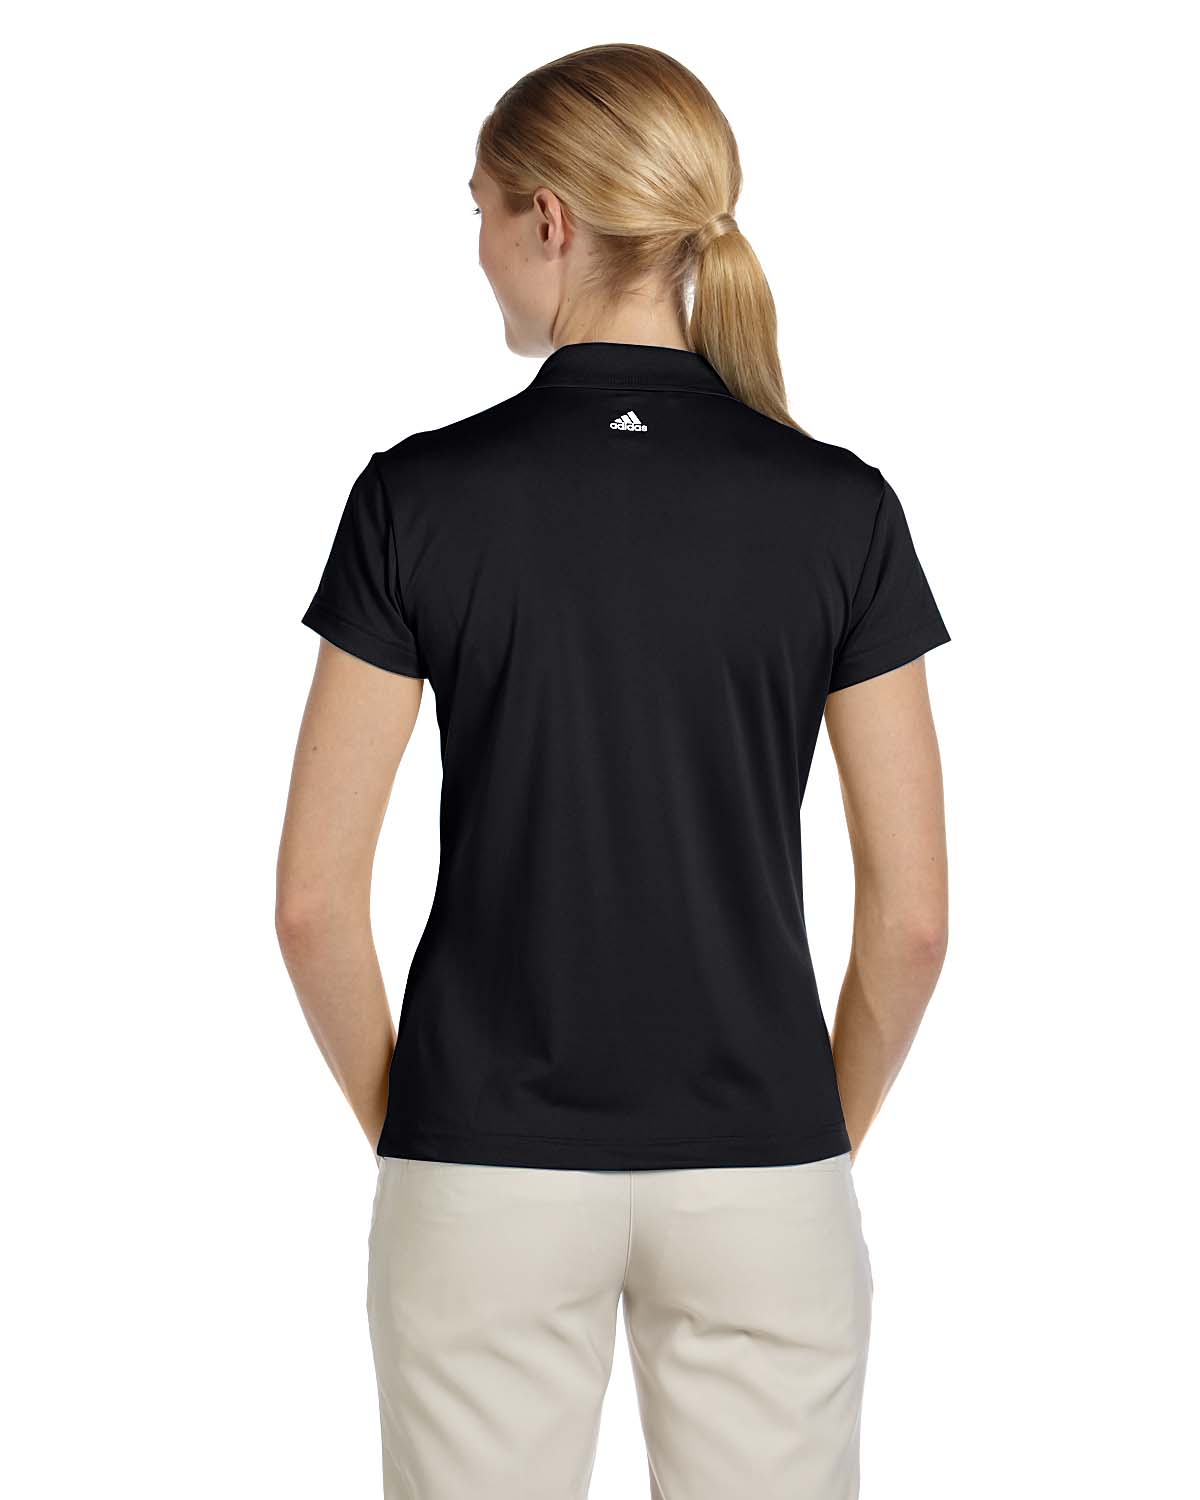 Adidas Golf Womens ClimaLite Basic Short Sleeve Pique Polo S-XL A122 | eBay